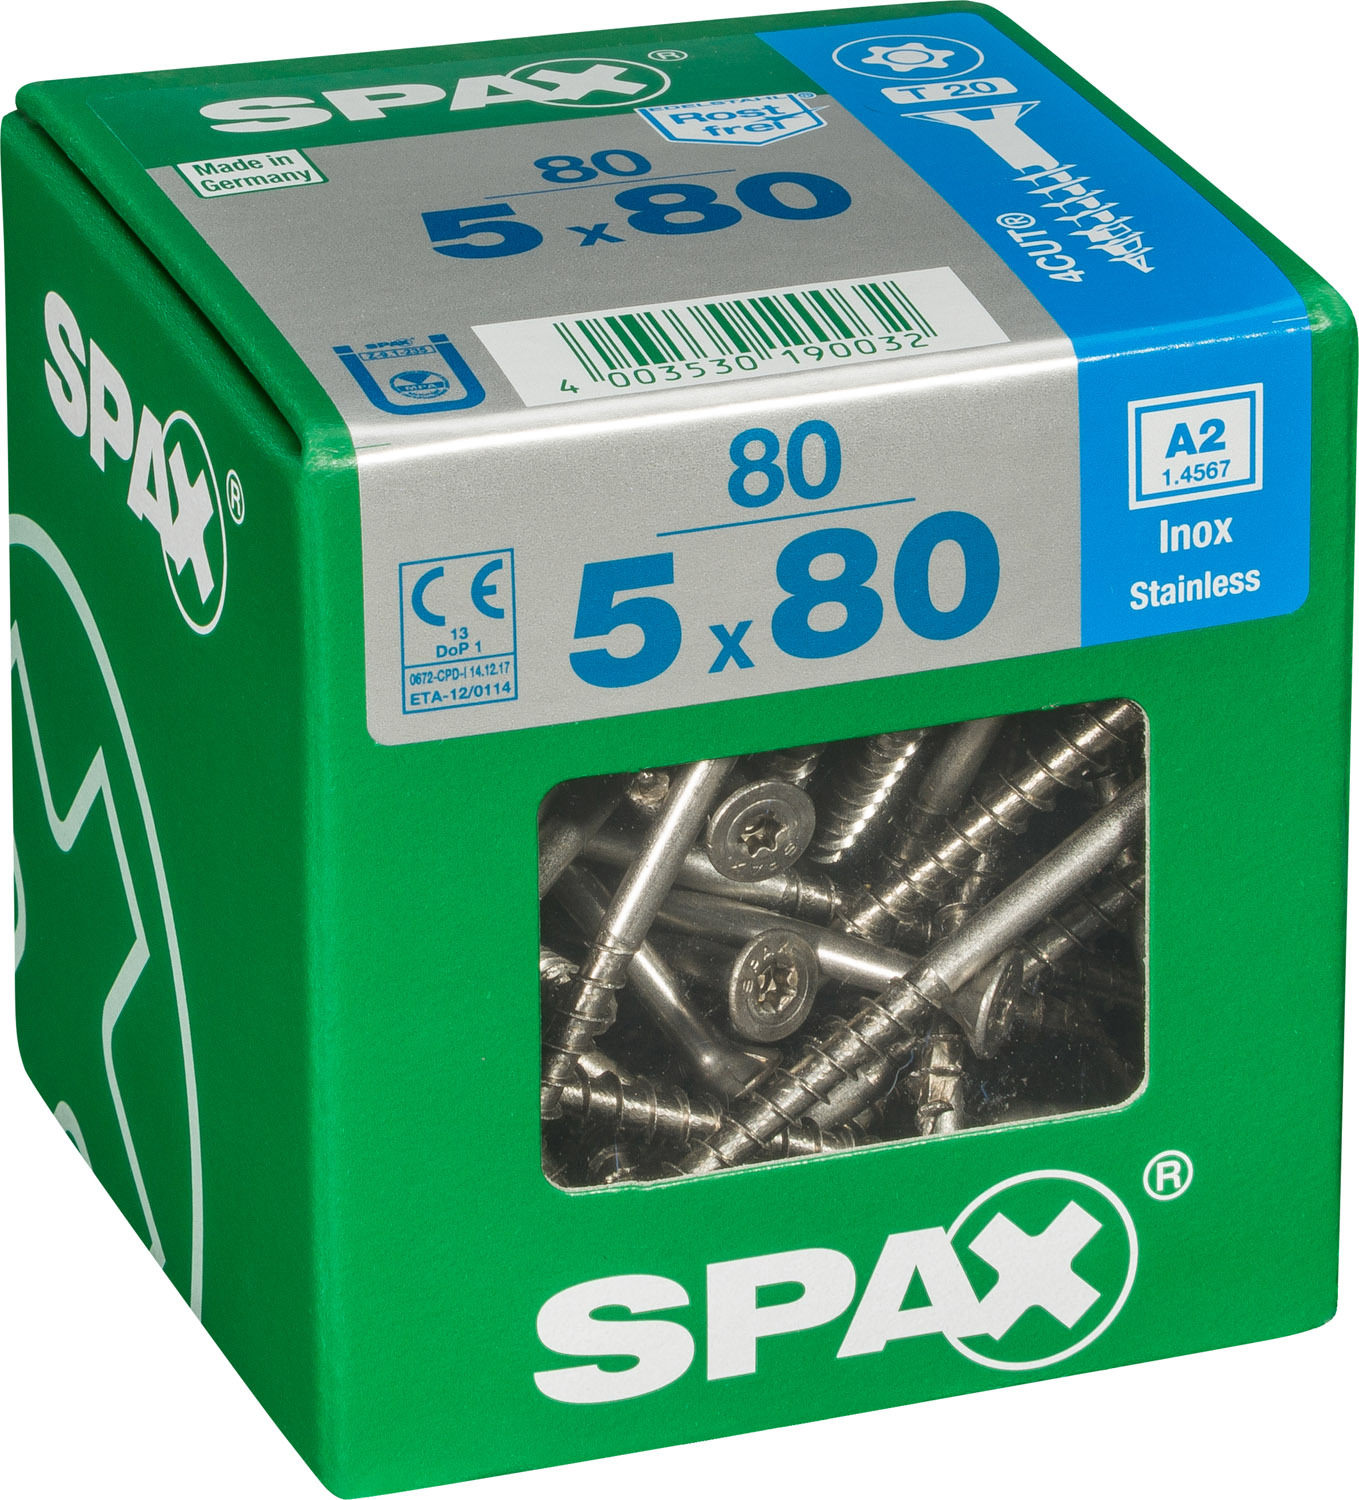 SPAX INTERNATIONAL GMBH & CO. KG - ENNEP Universalschrauben rfr A2 TG 5,0x80 mm SeKo T-Star Plus Pack XL (80 Stück)